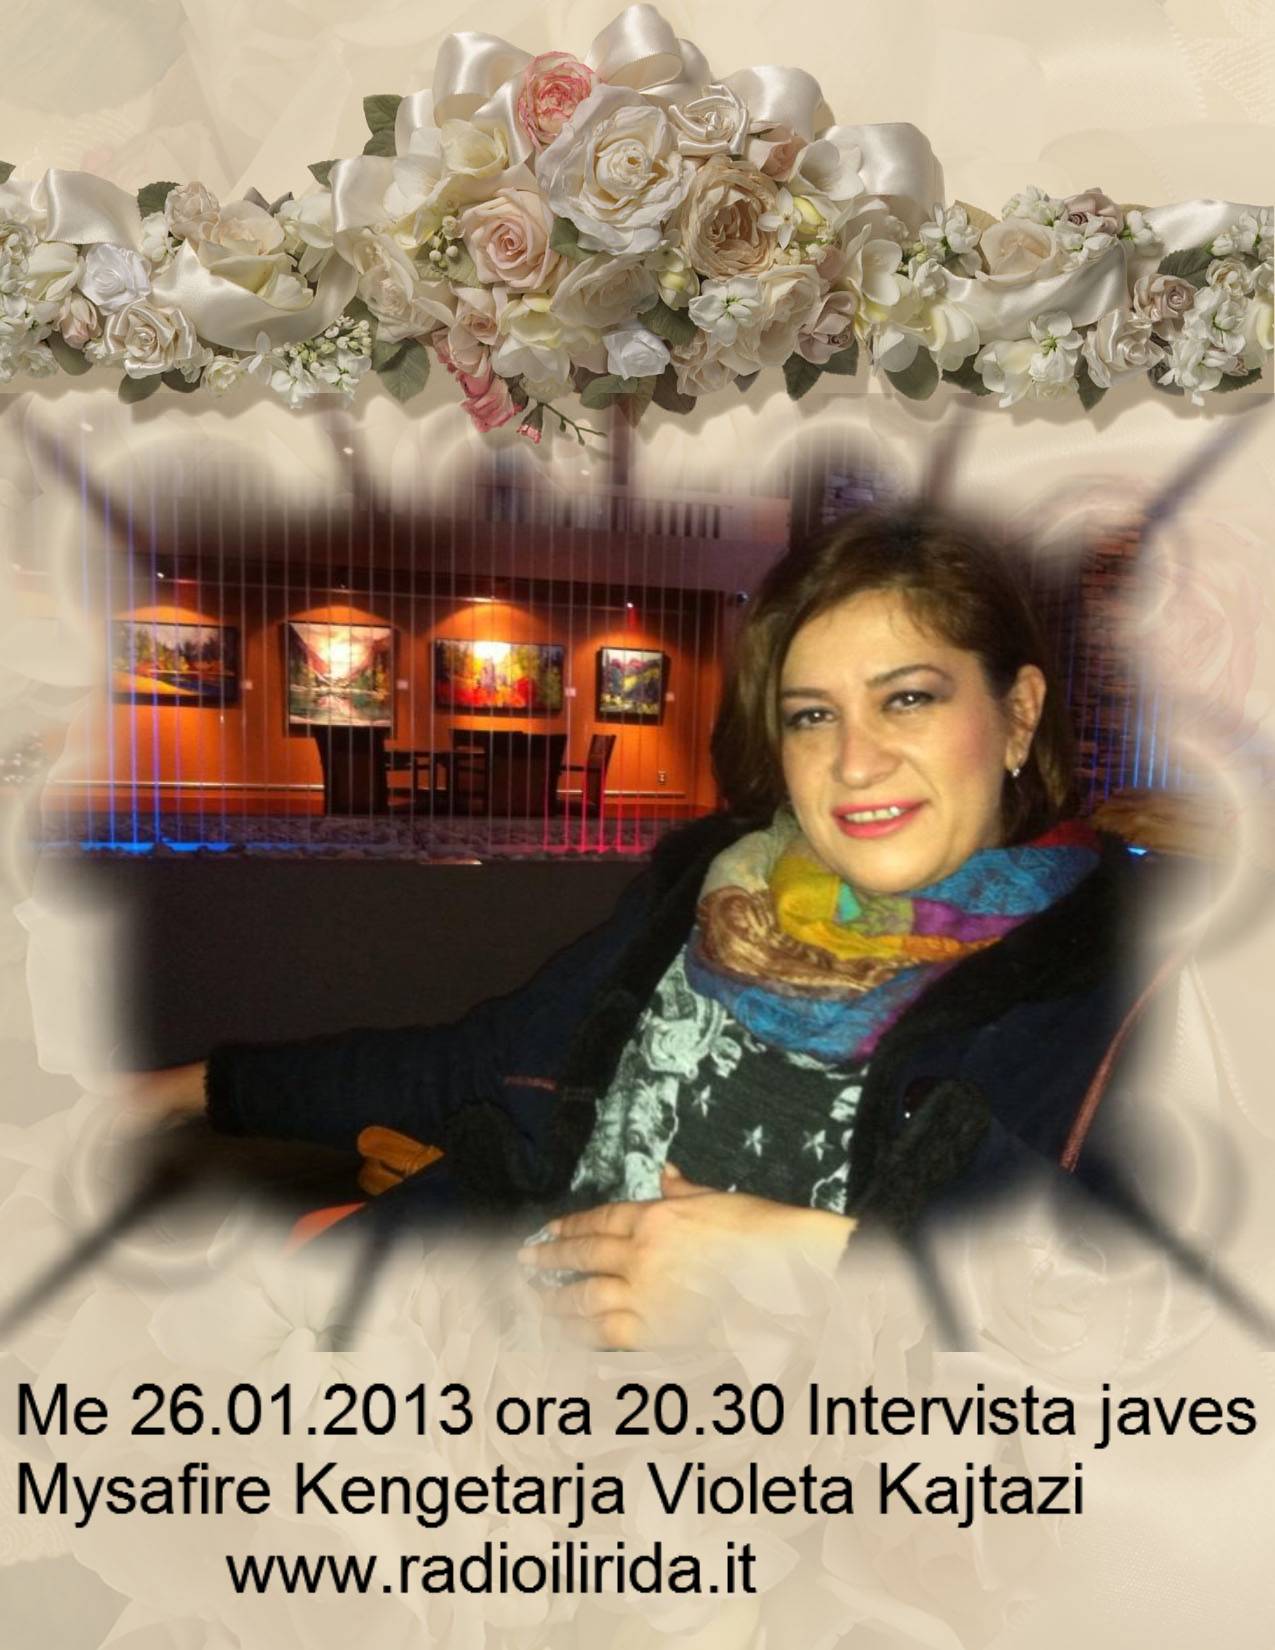 Intervista e Javes